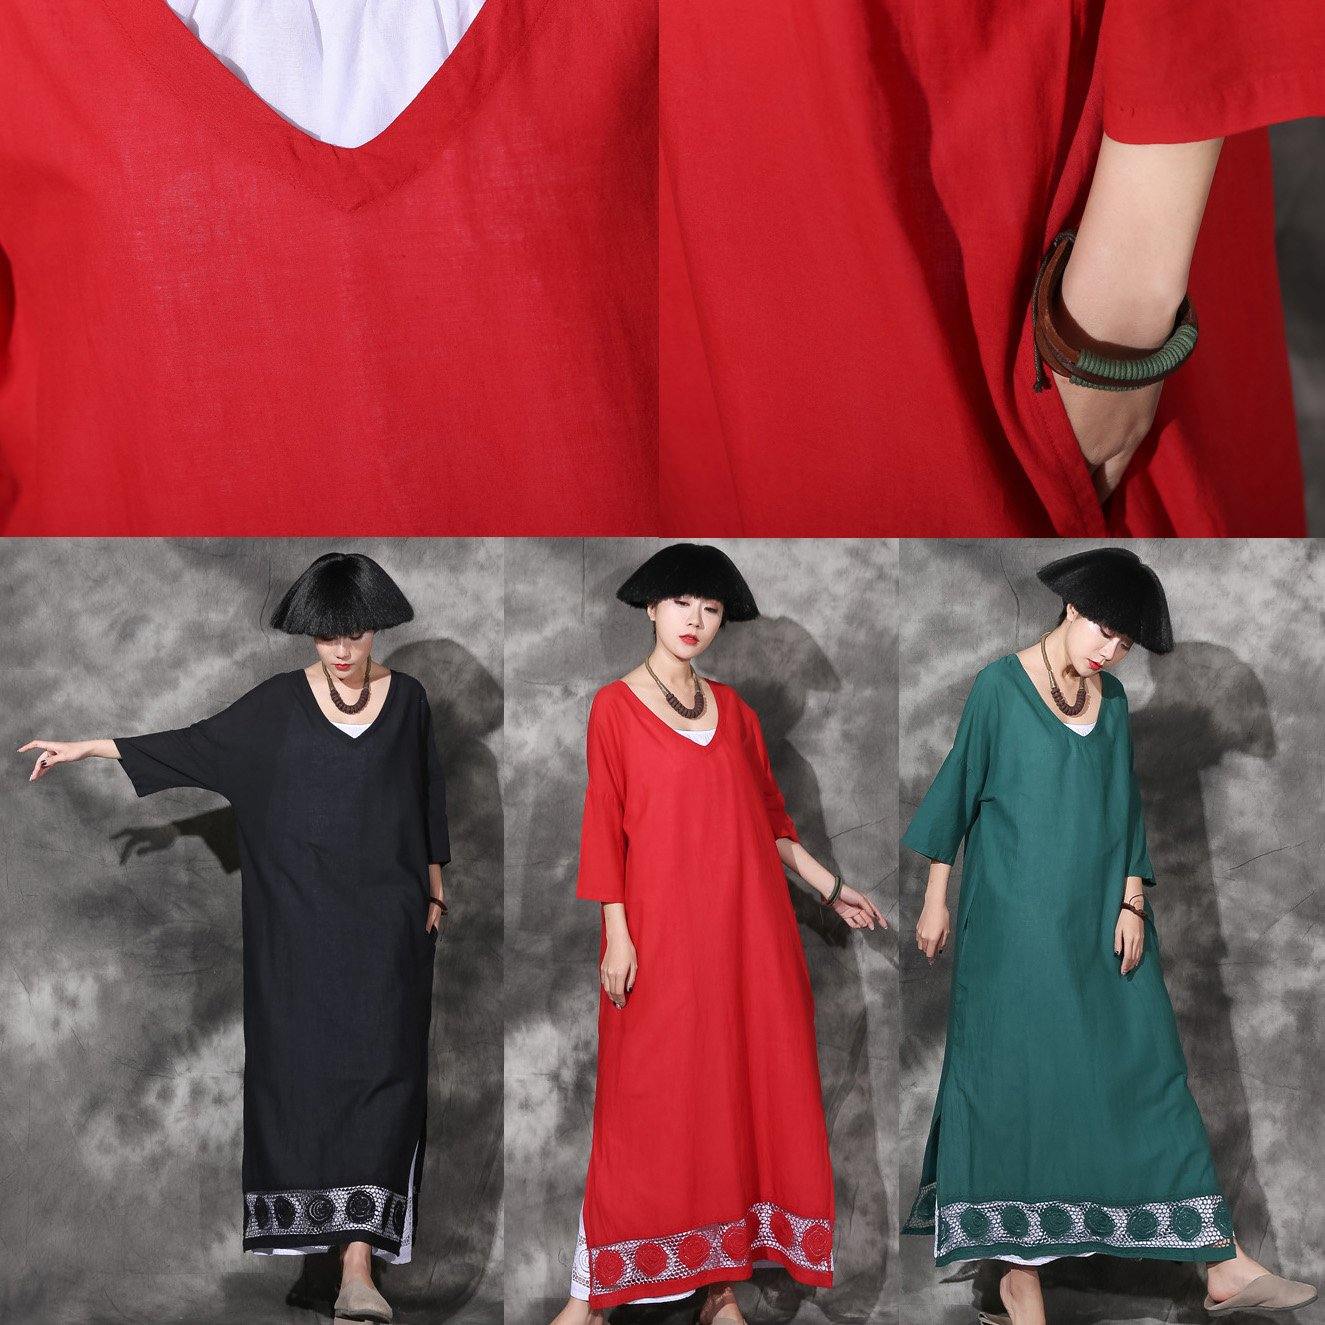 Organic side open lace hem cotton Tunics Sleeve red v neck Maxi Dress summer - Omychic